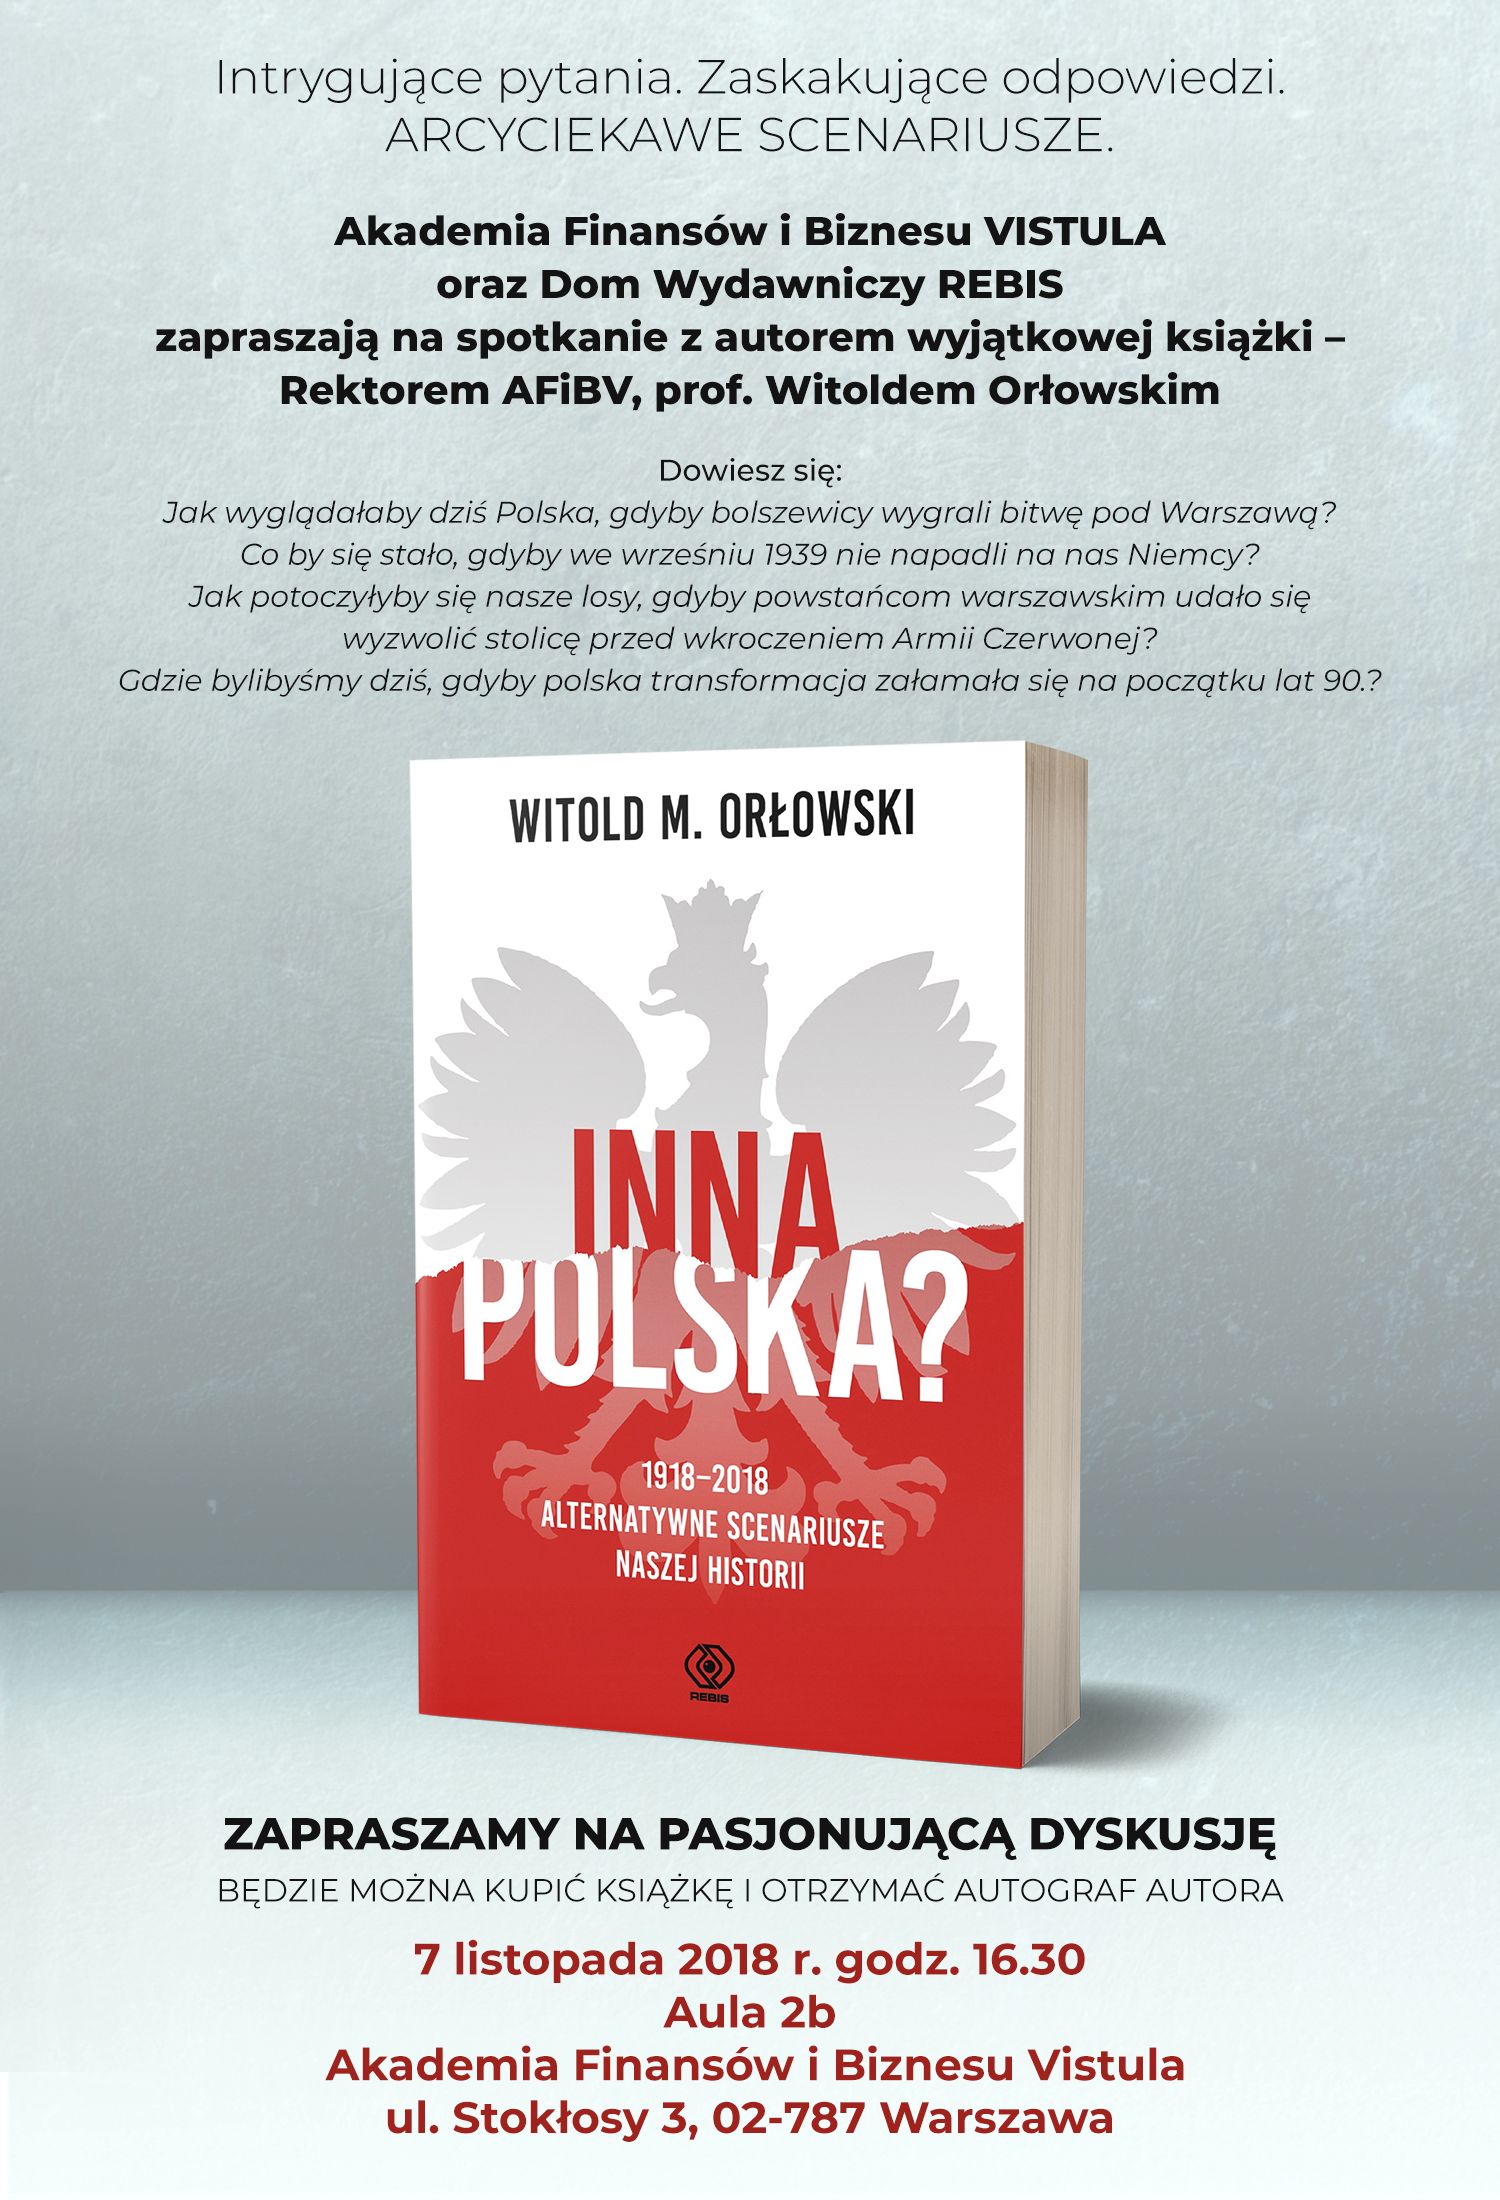 "Inna Polska?", prof. Witold Orłowski